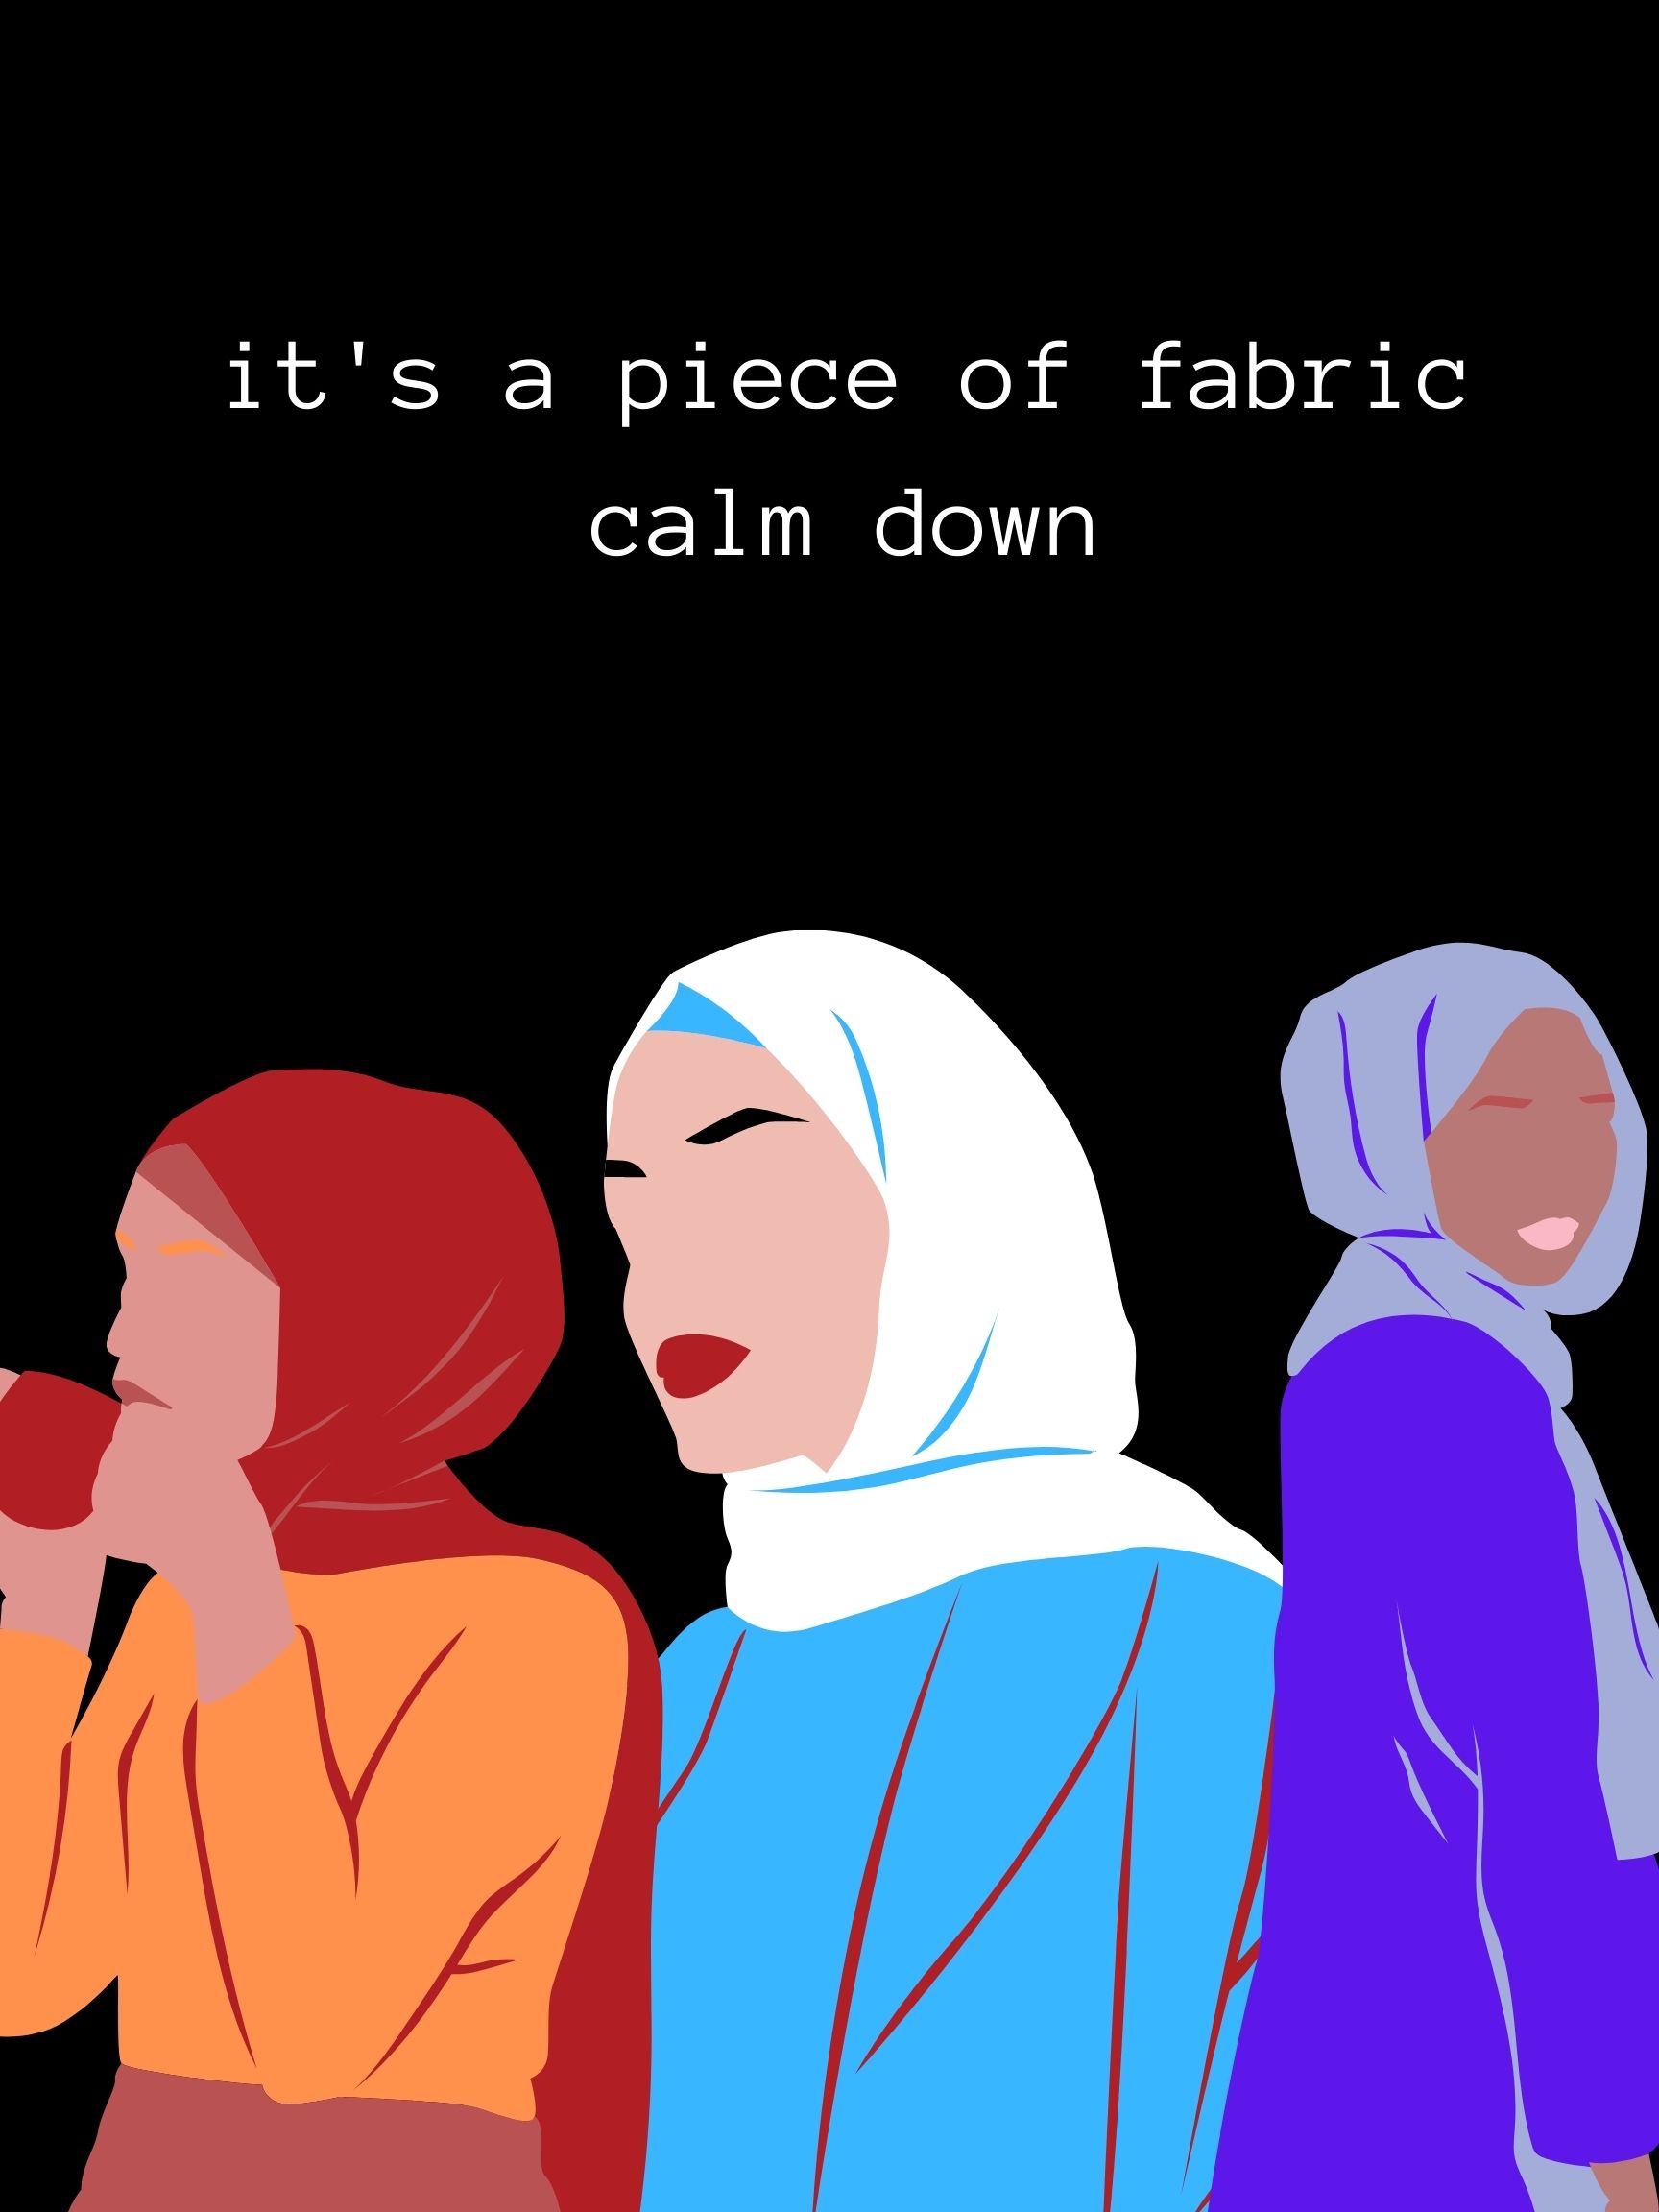 Nadia Sheikh. “It’s a Piece of Fabric,” digital artwork, 2020.